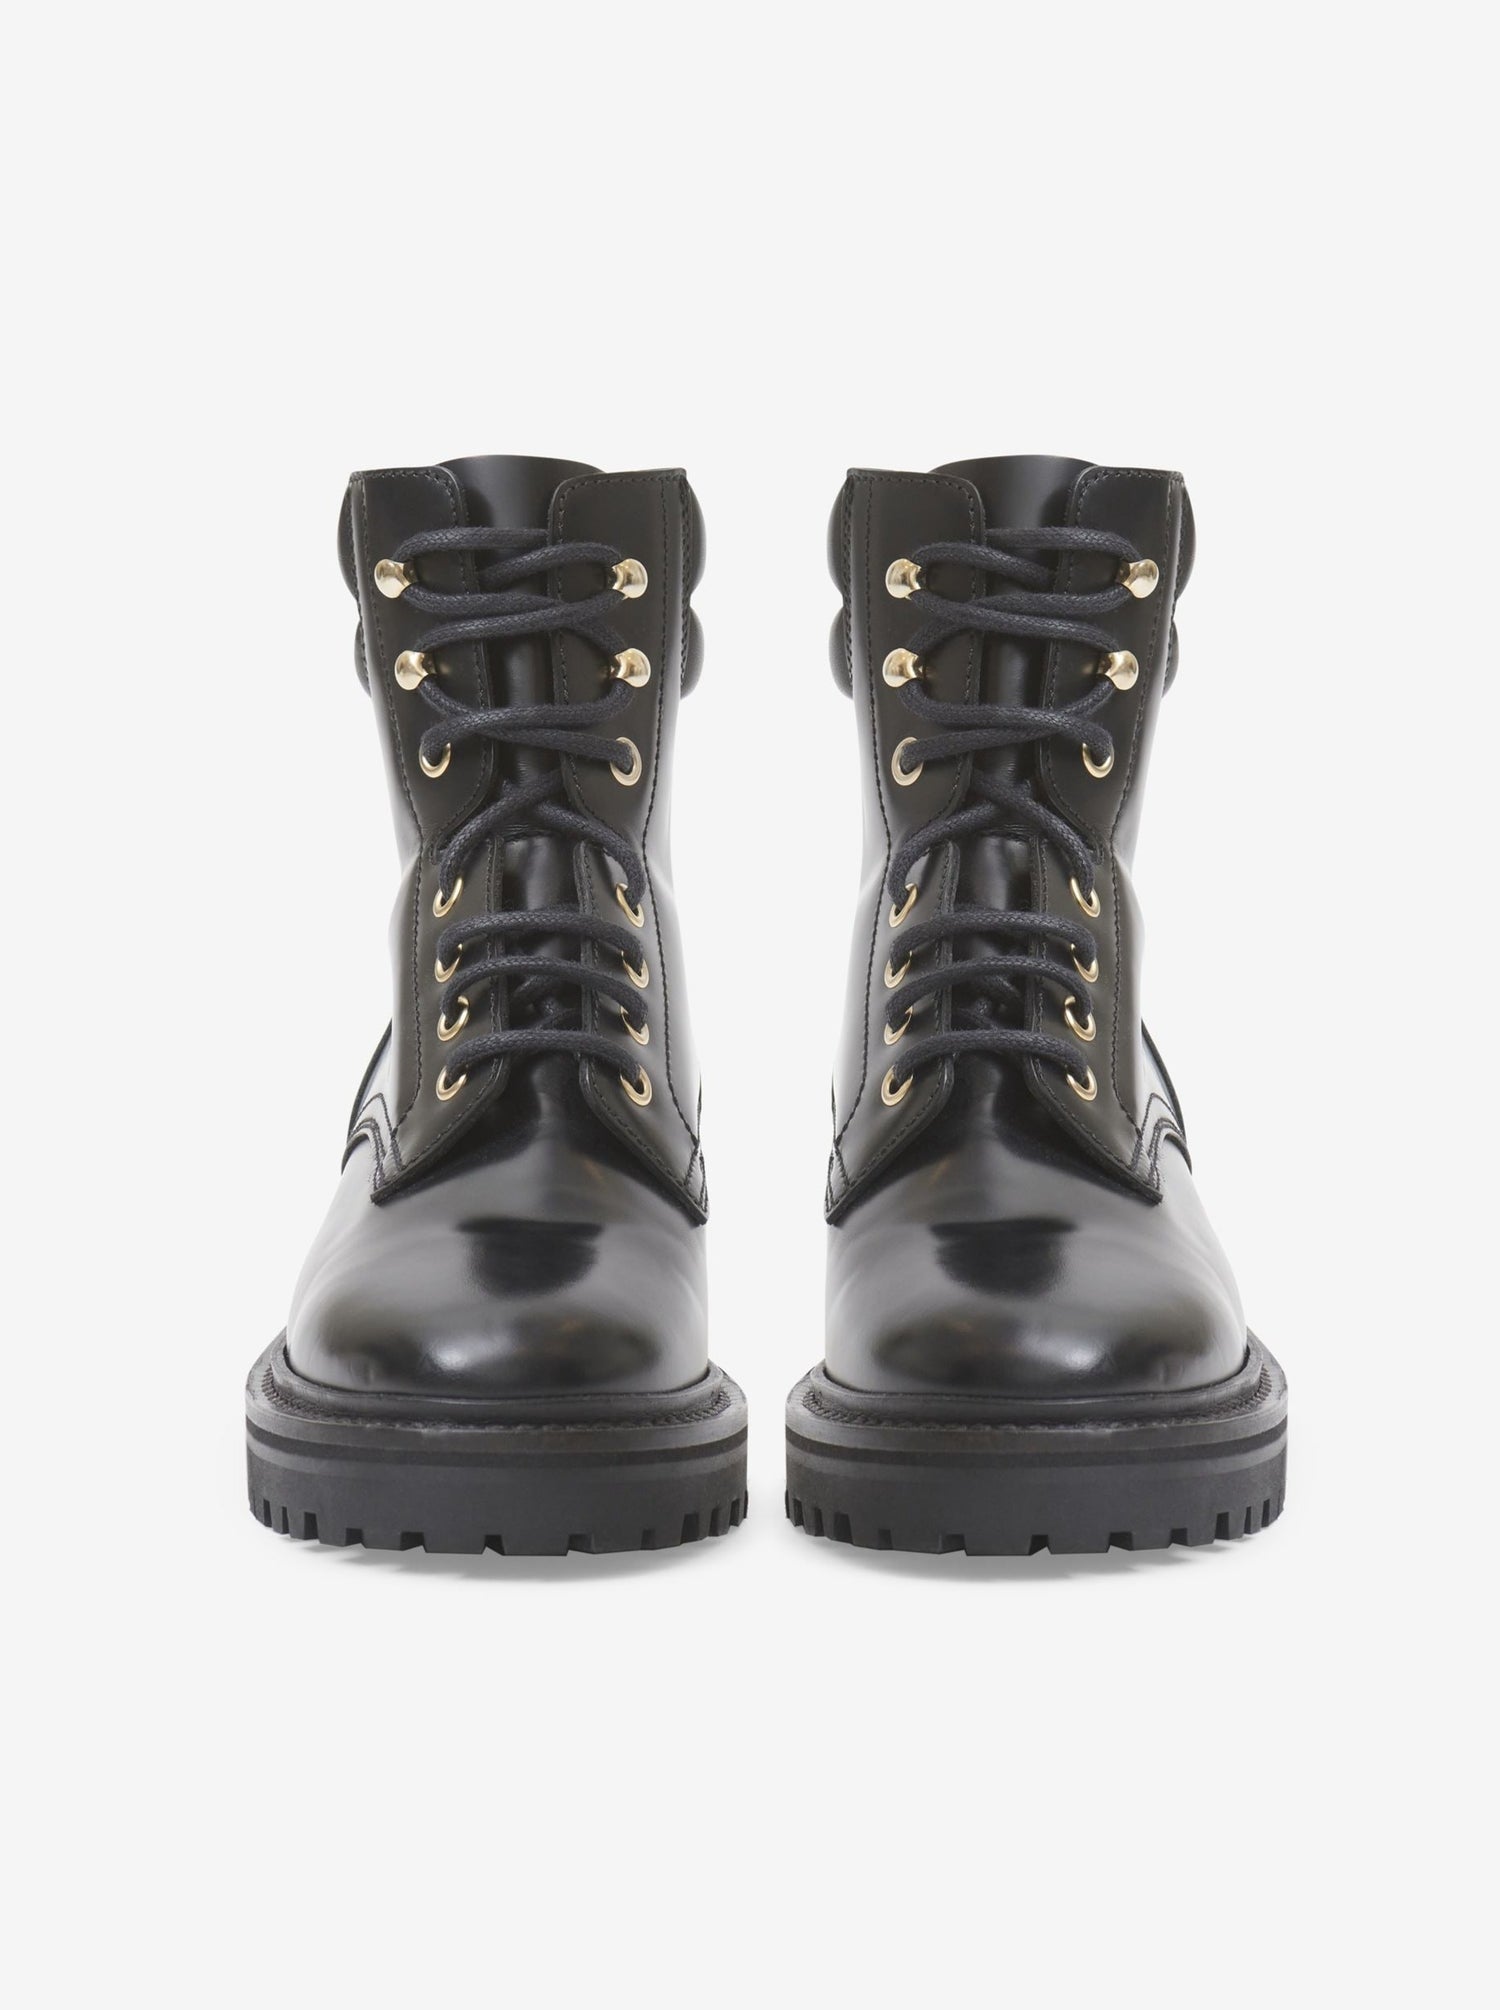 CAMPA boots, black